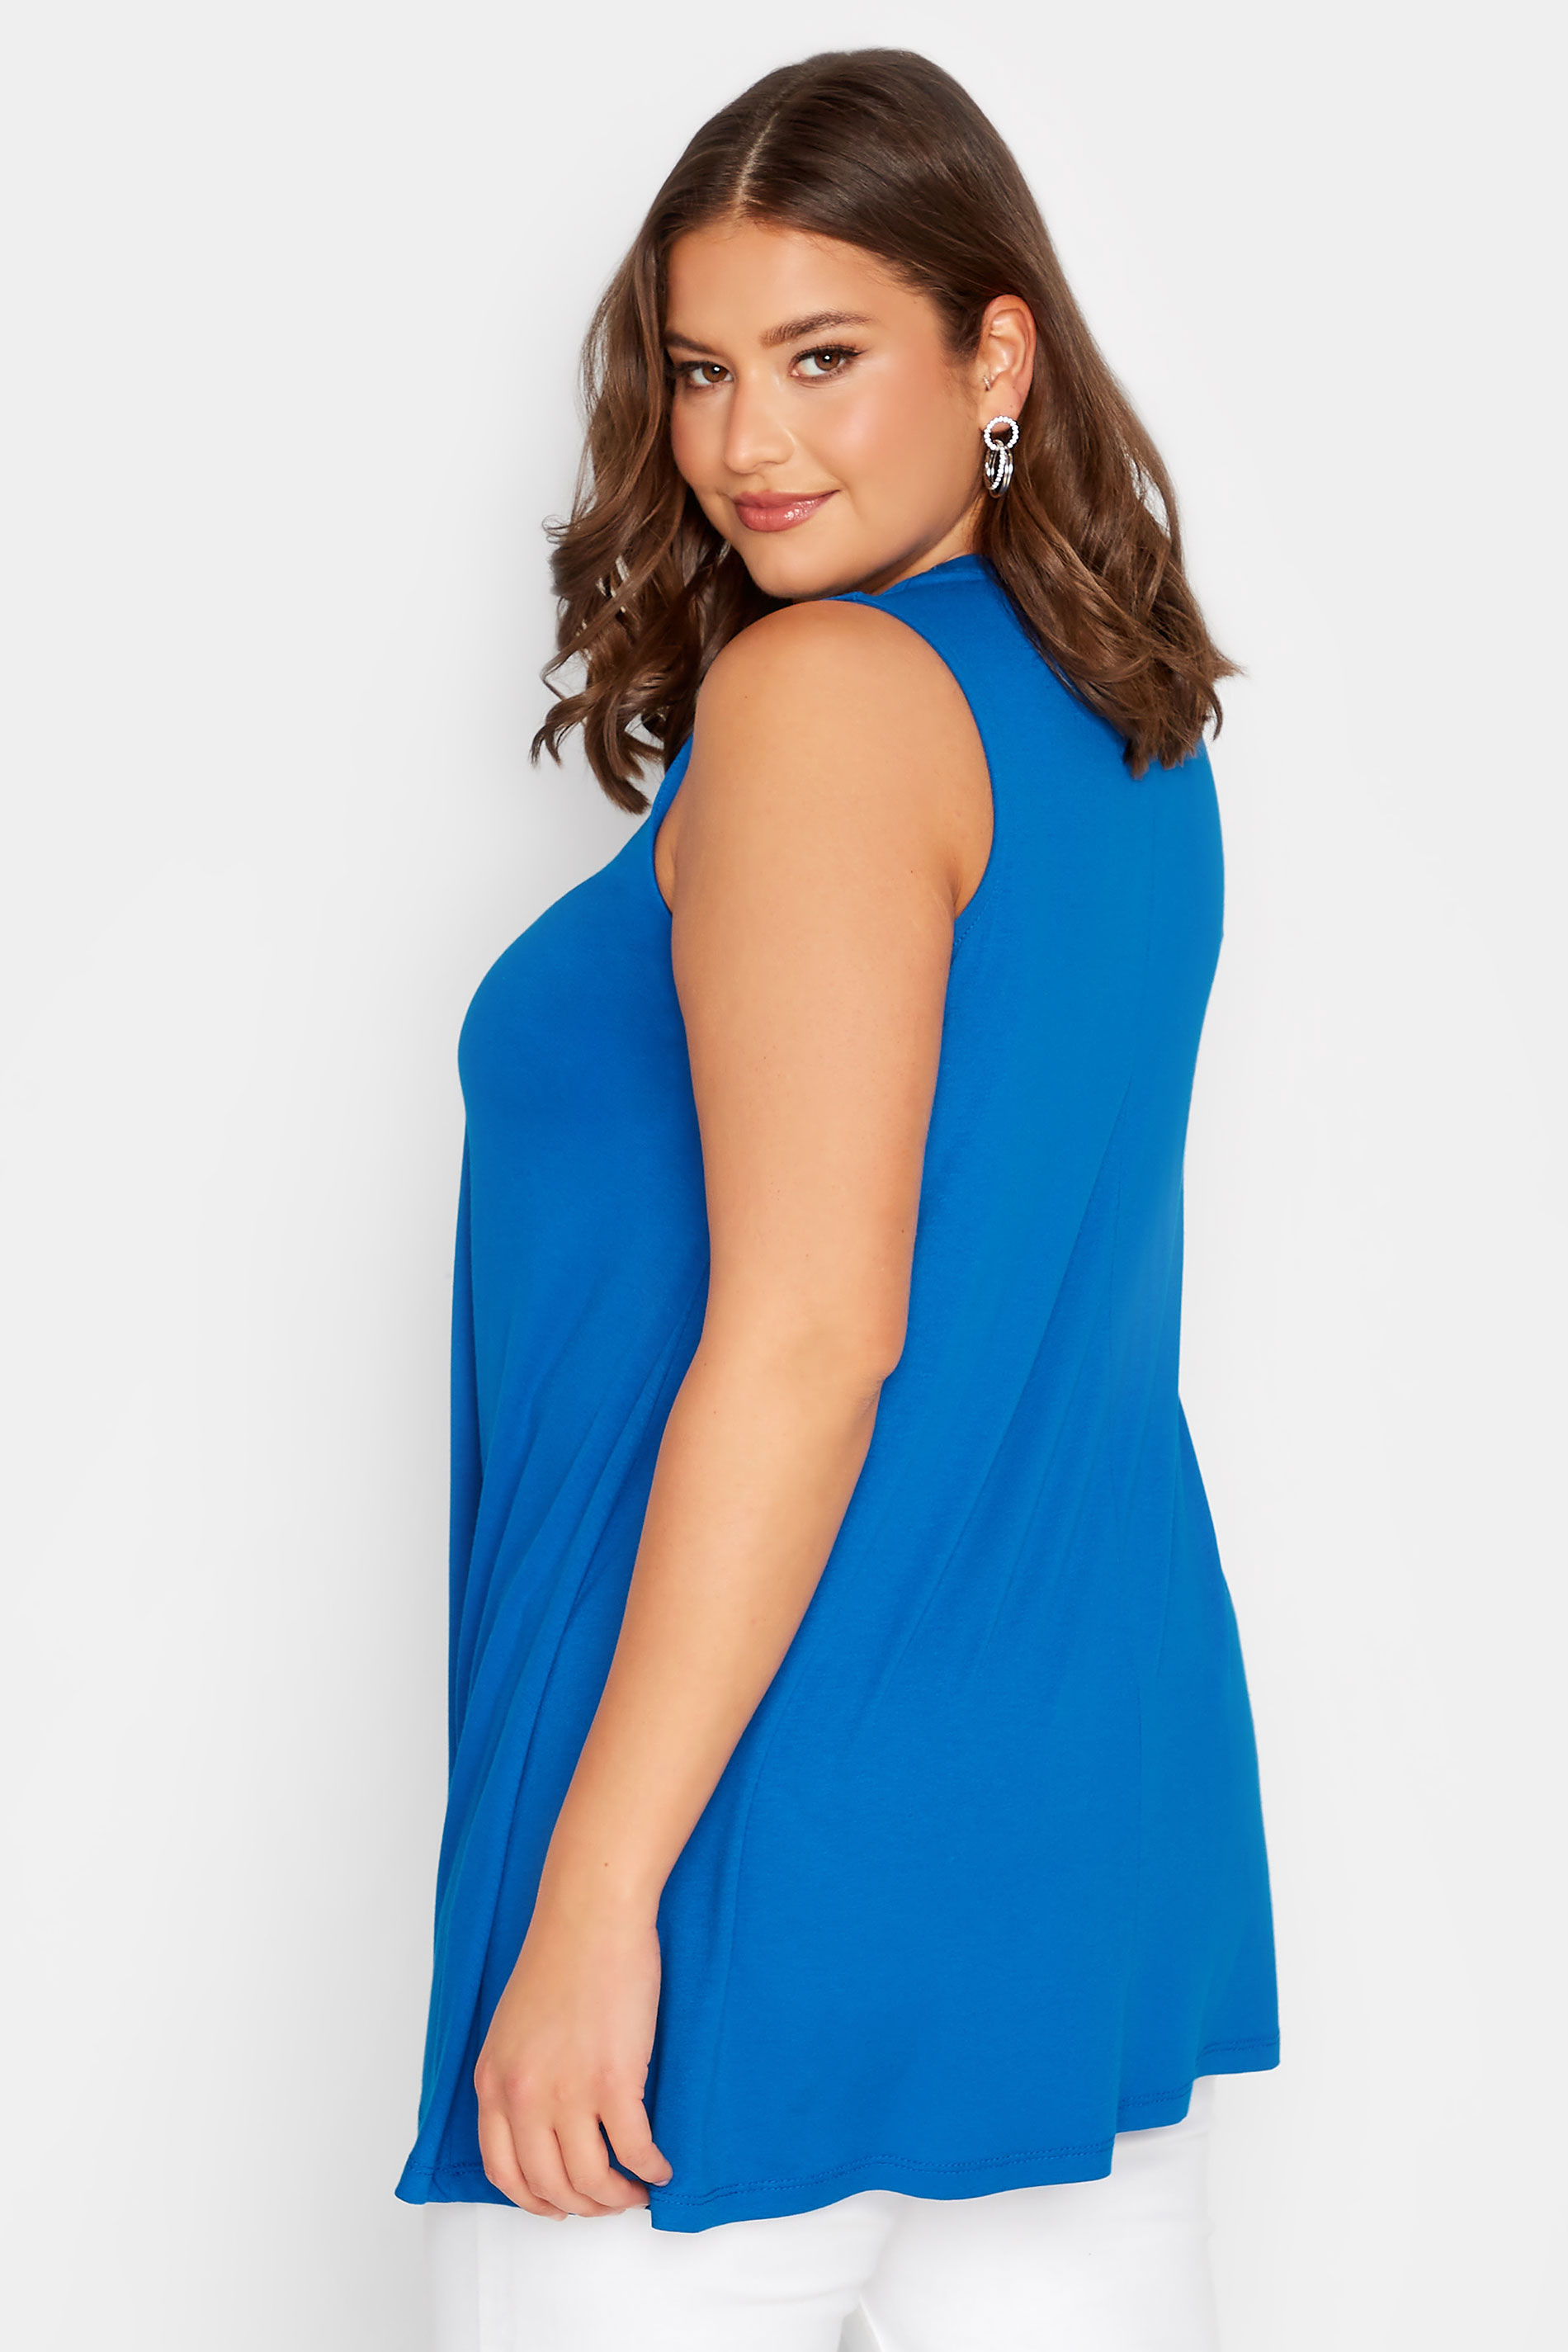 YOURS Curve Plus Size Cobalt Blue Swing Vest Top | Yours Clothing  3